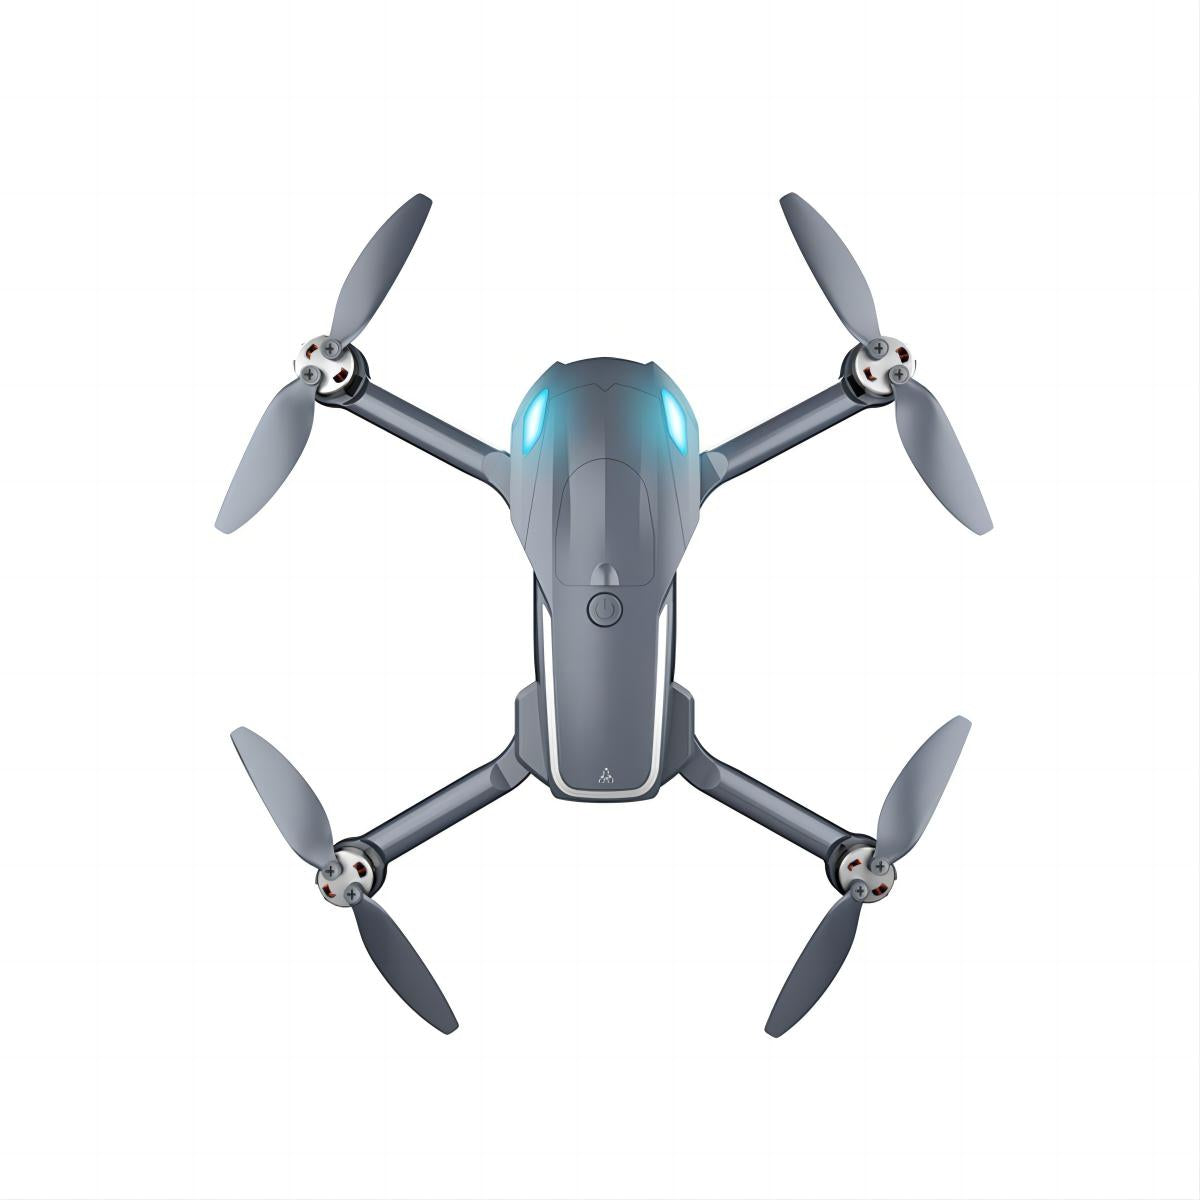 PIHOT P60 Max Smart 4K Drone - Hugmie